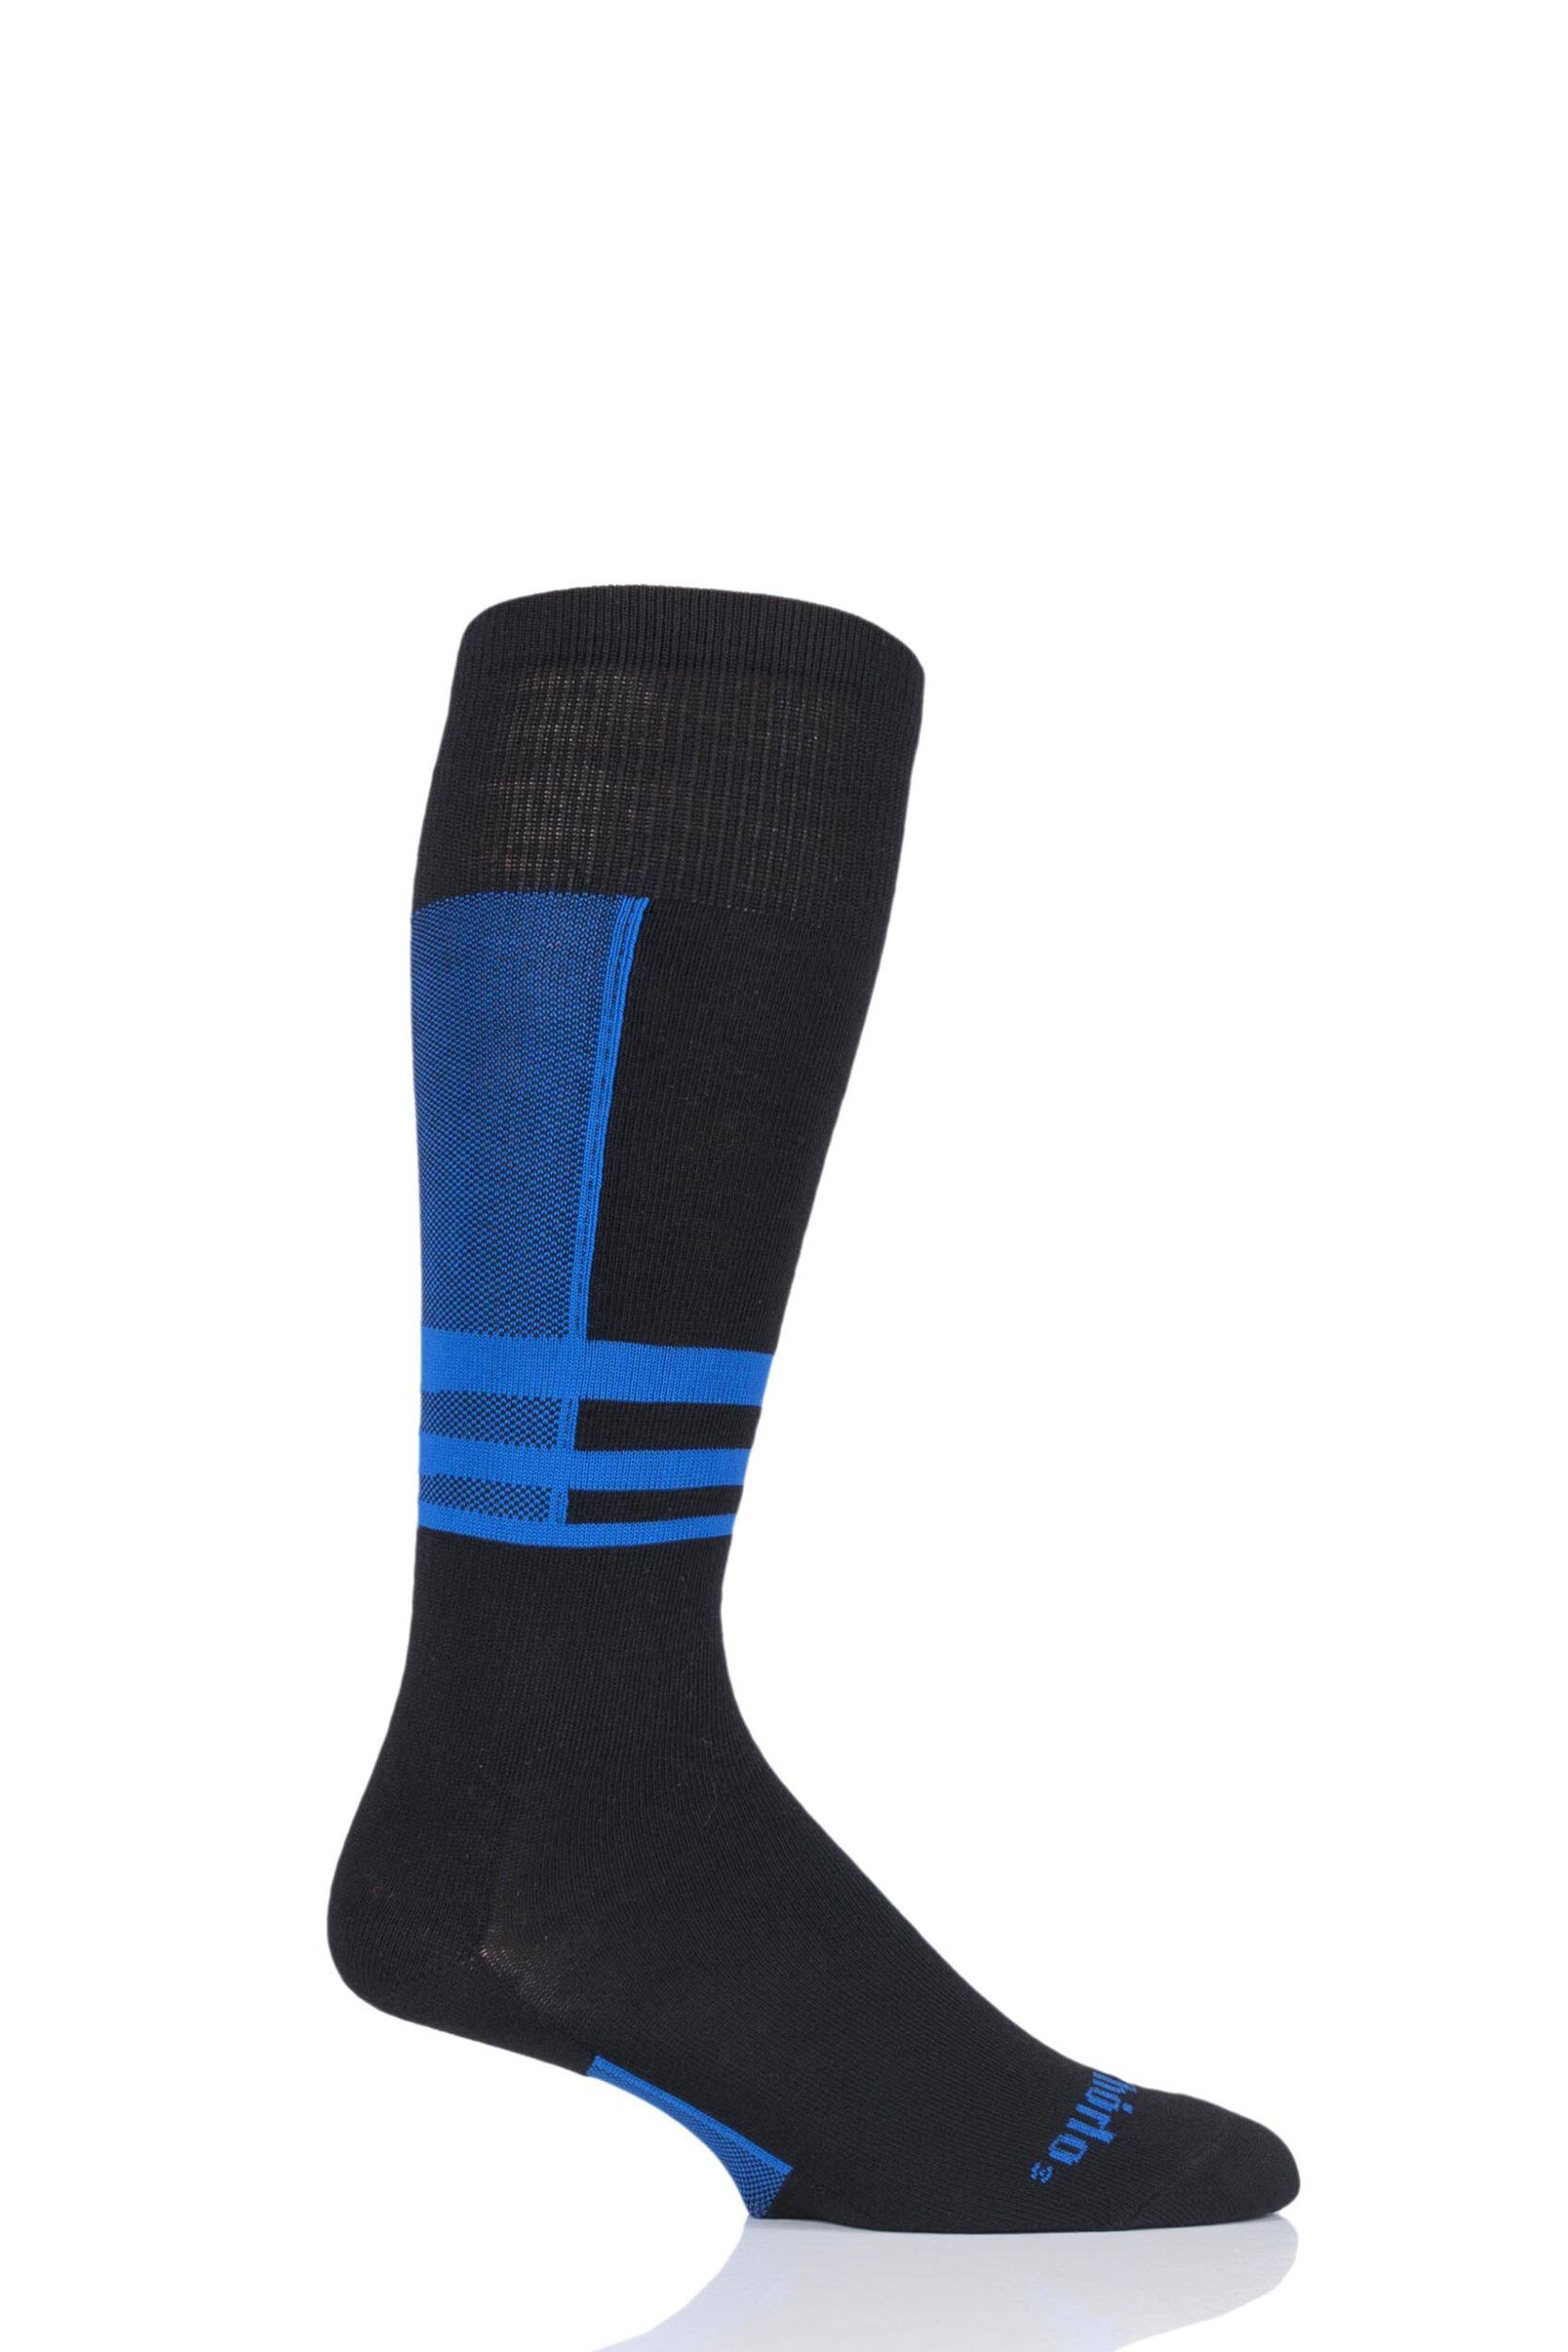 Thorlo Extreme Ski Socks - Black, 3.5-5